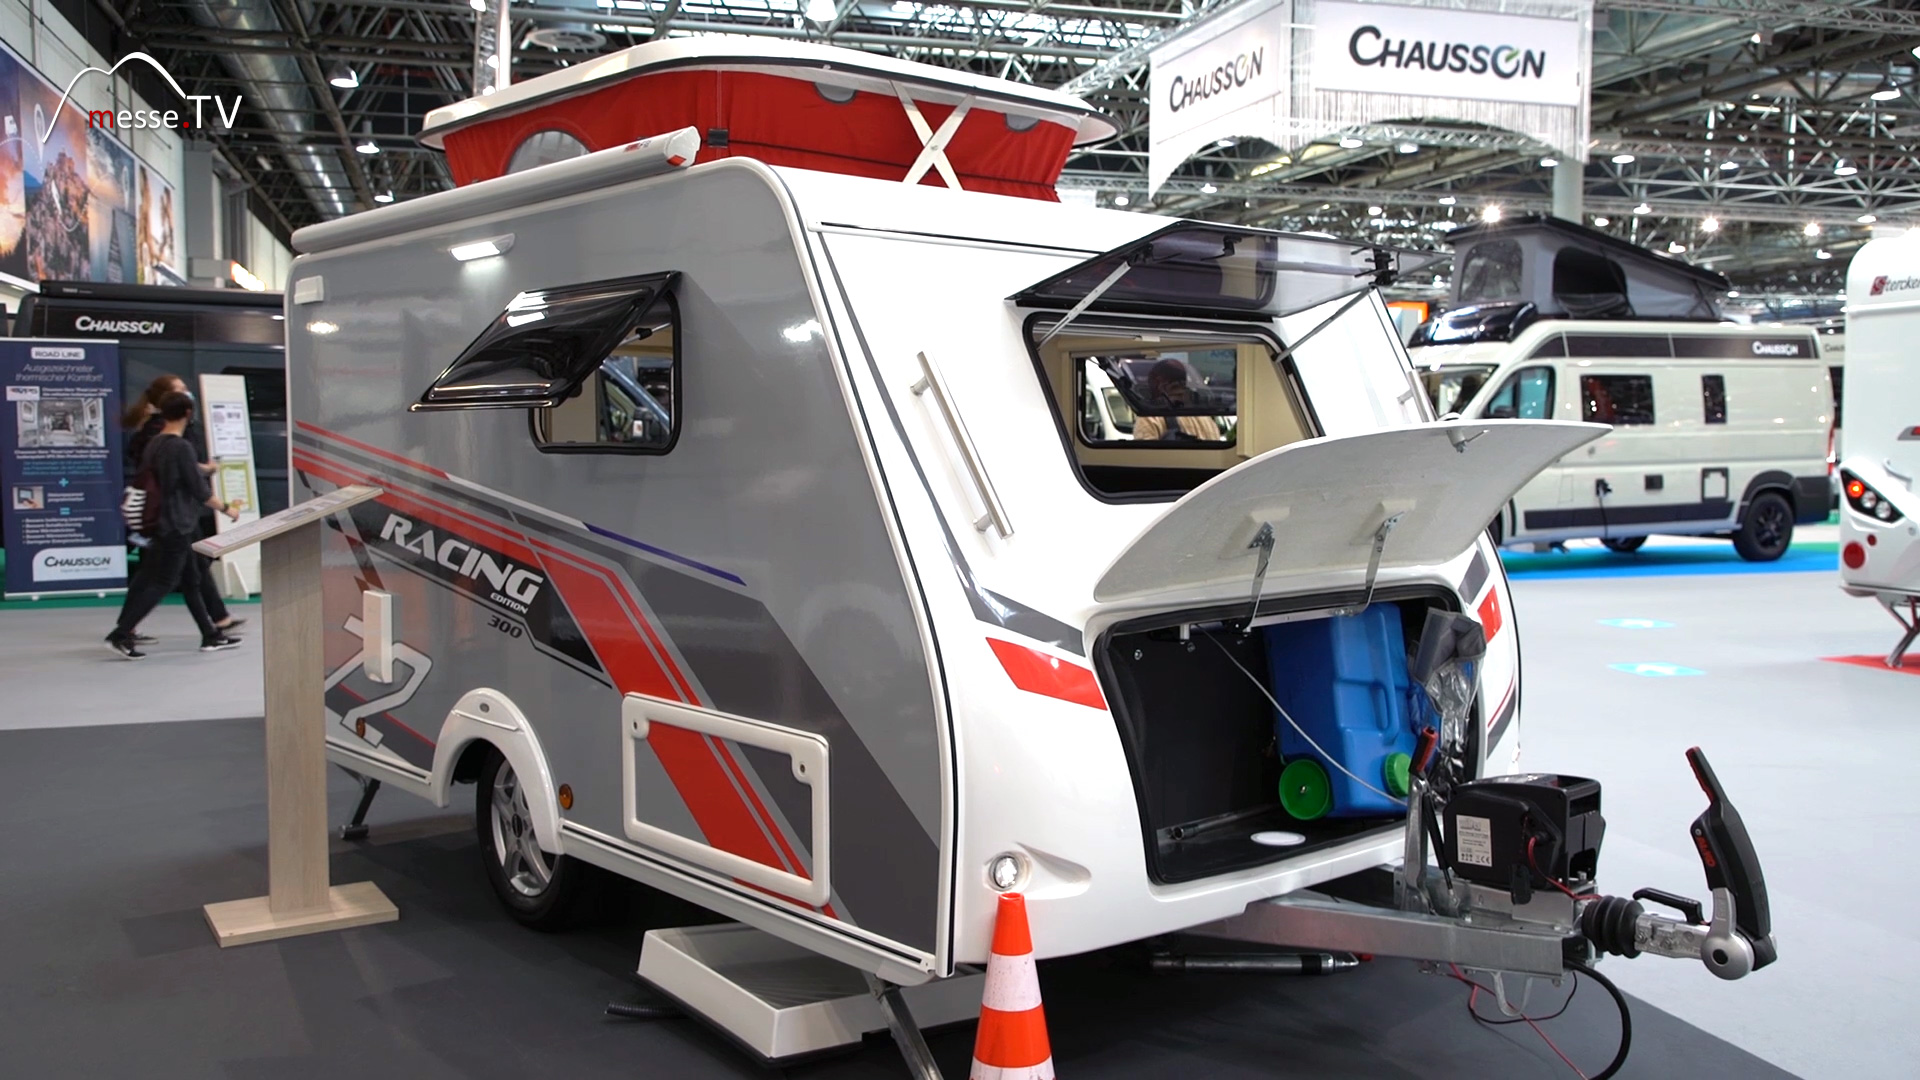 Caravan Service Neuhaus Wohnwagen Racing 300 Caravan Salon 2020 Düsseldorf